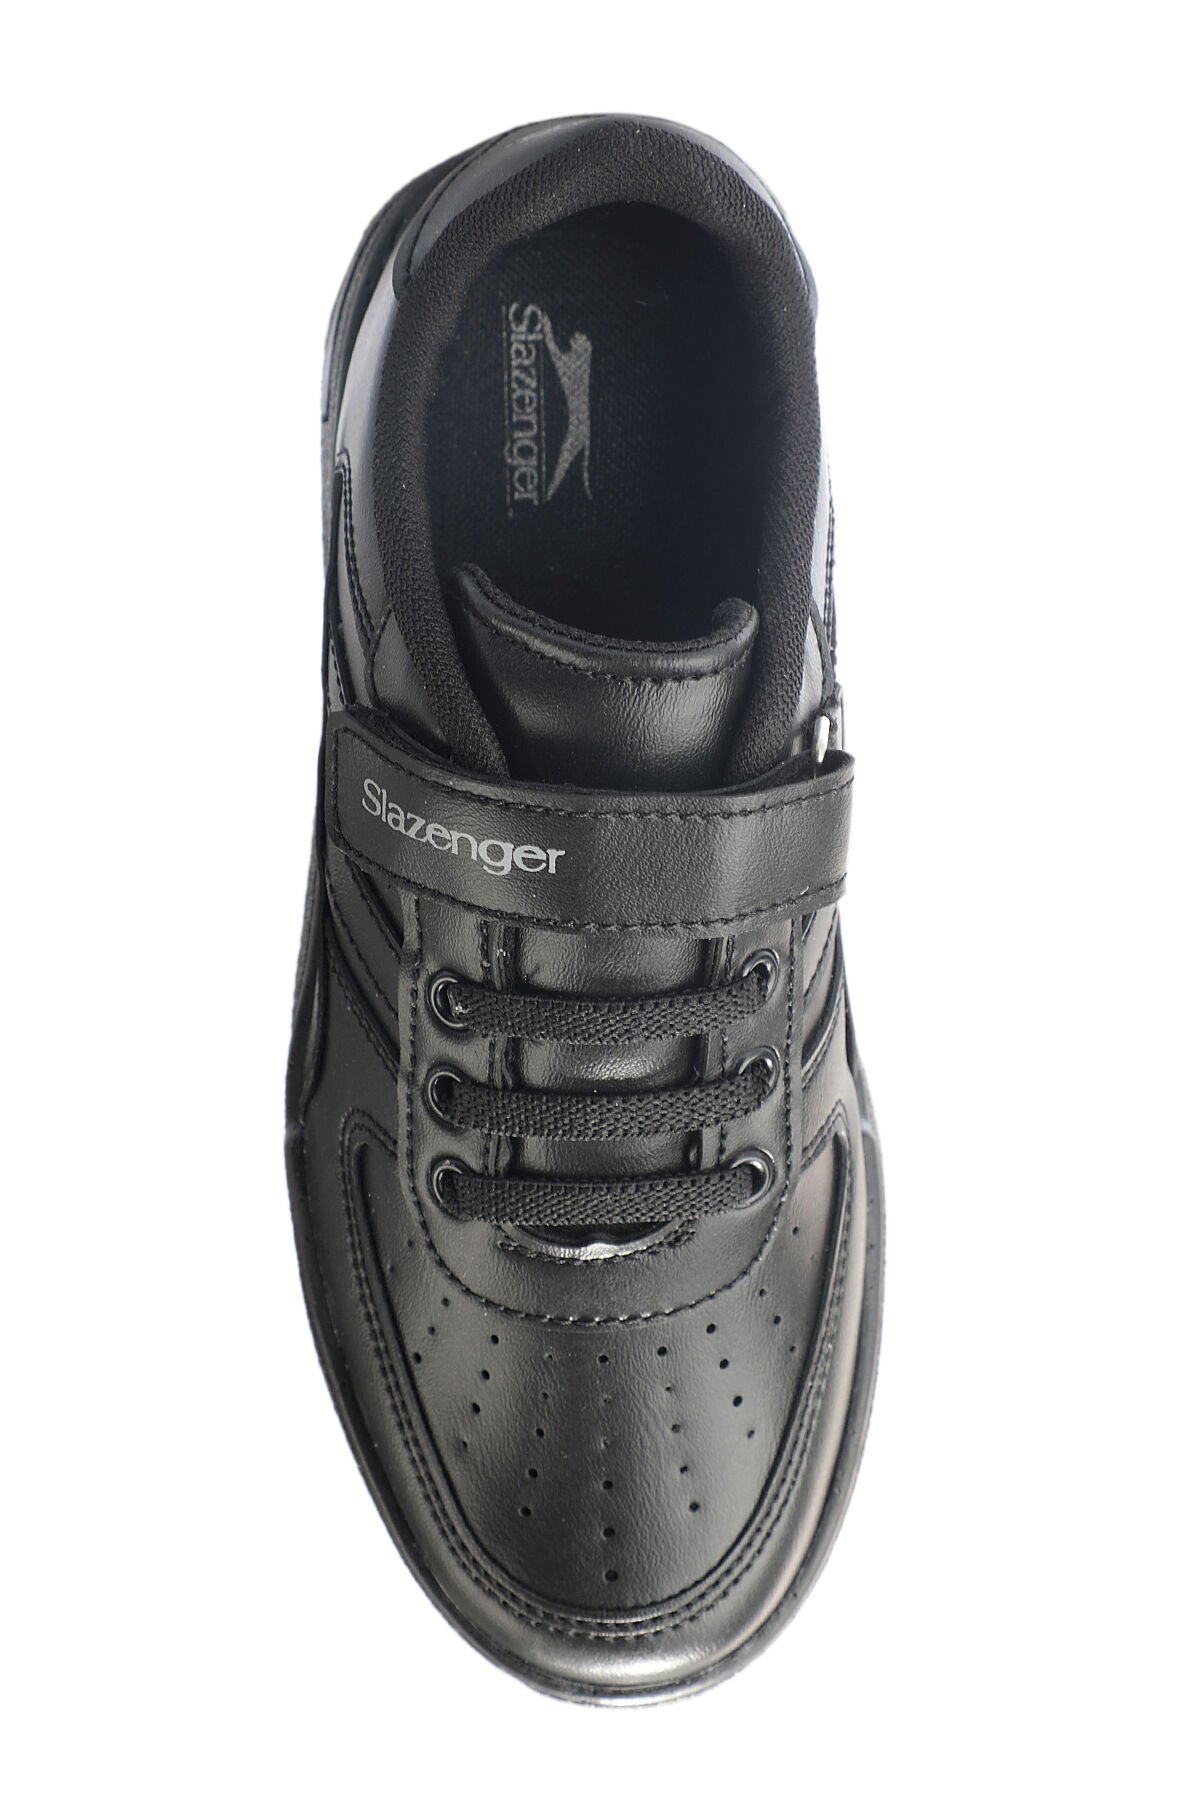 CAMP I Sneaker Erkek Çocuk Ayakkabı Siyah / Siyah - Thumbnail